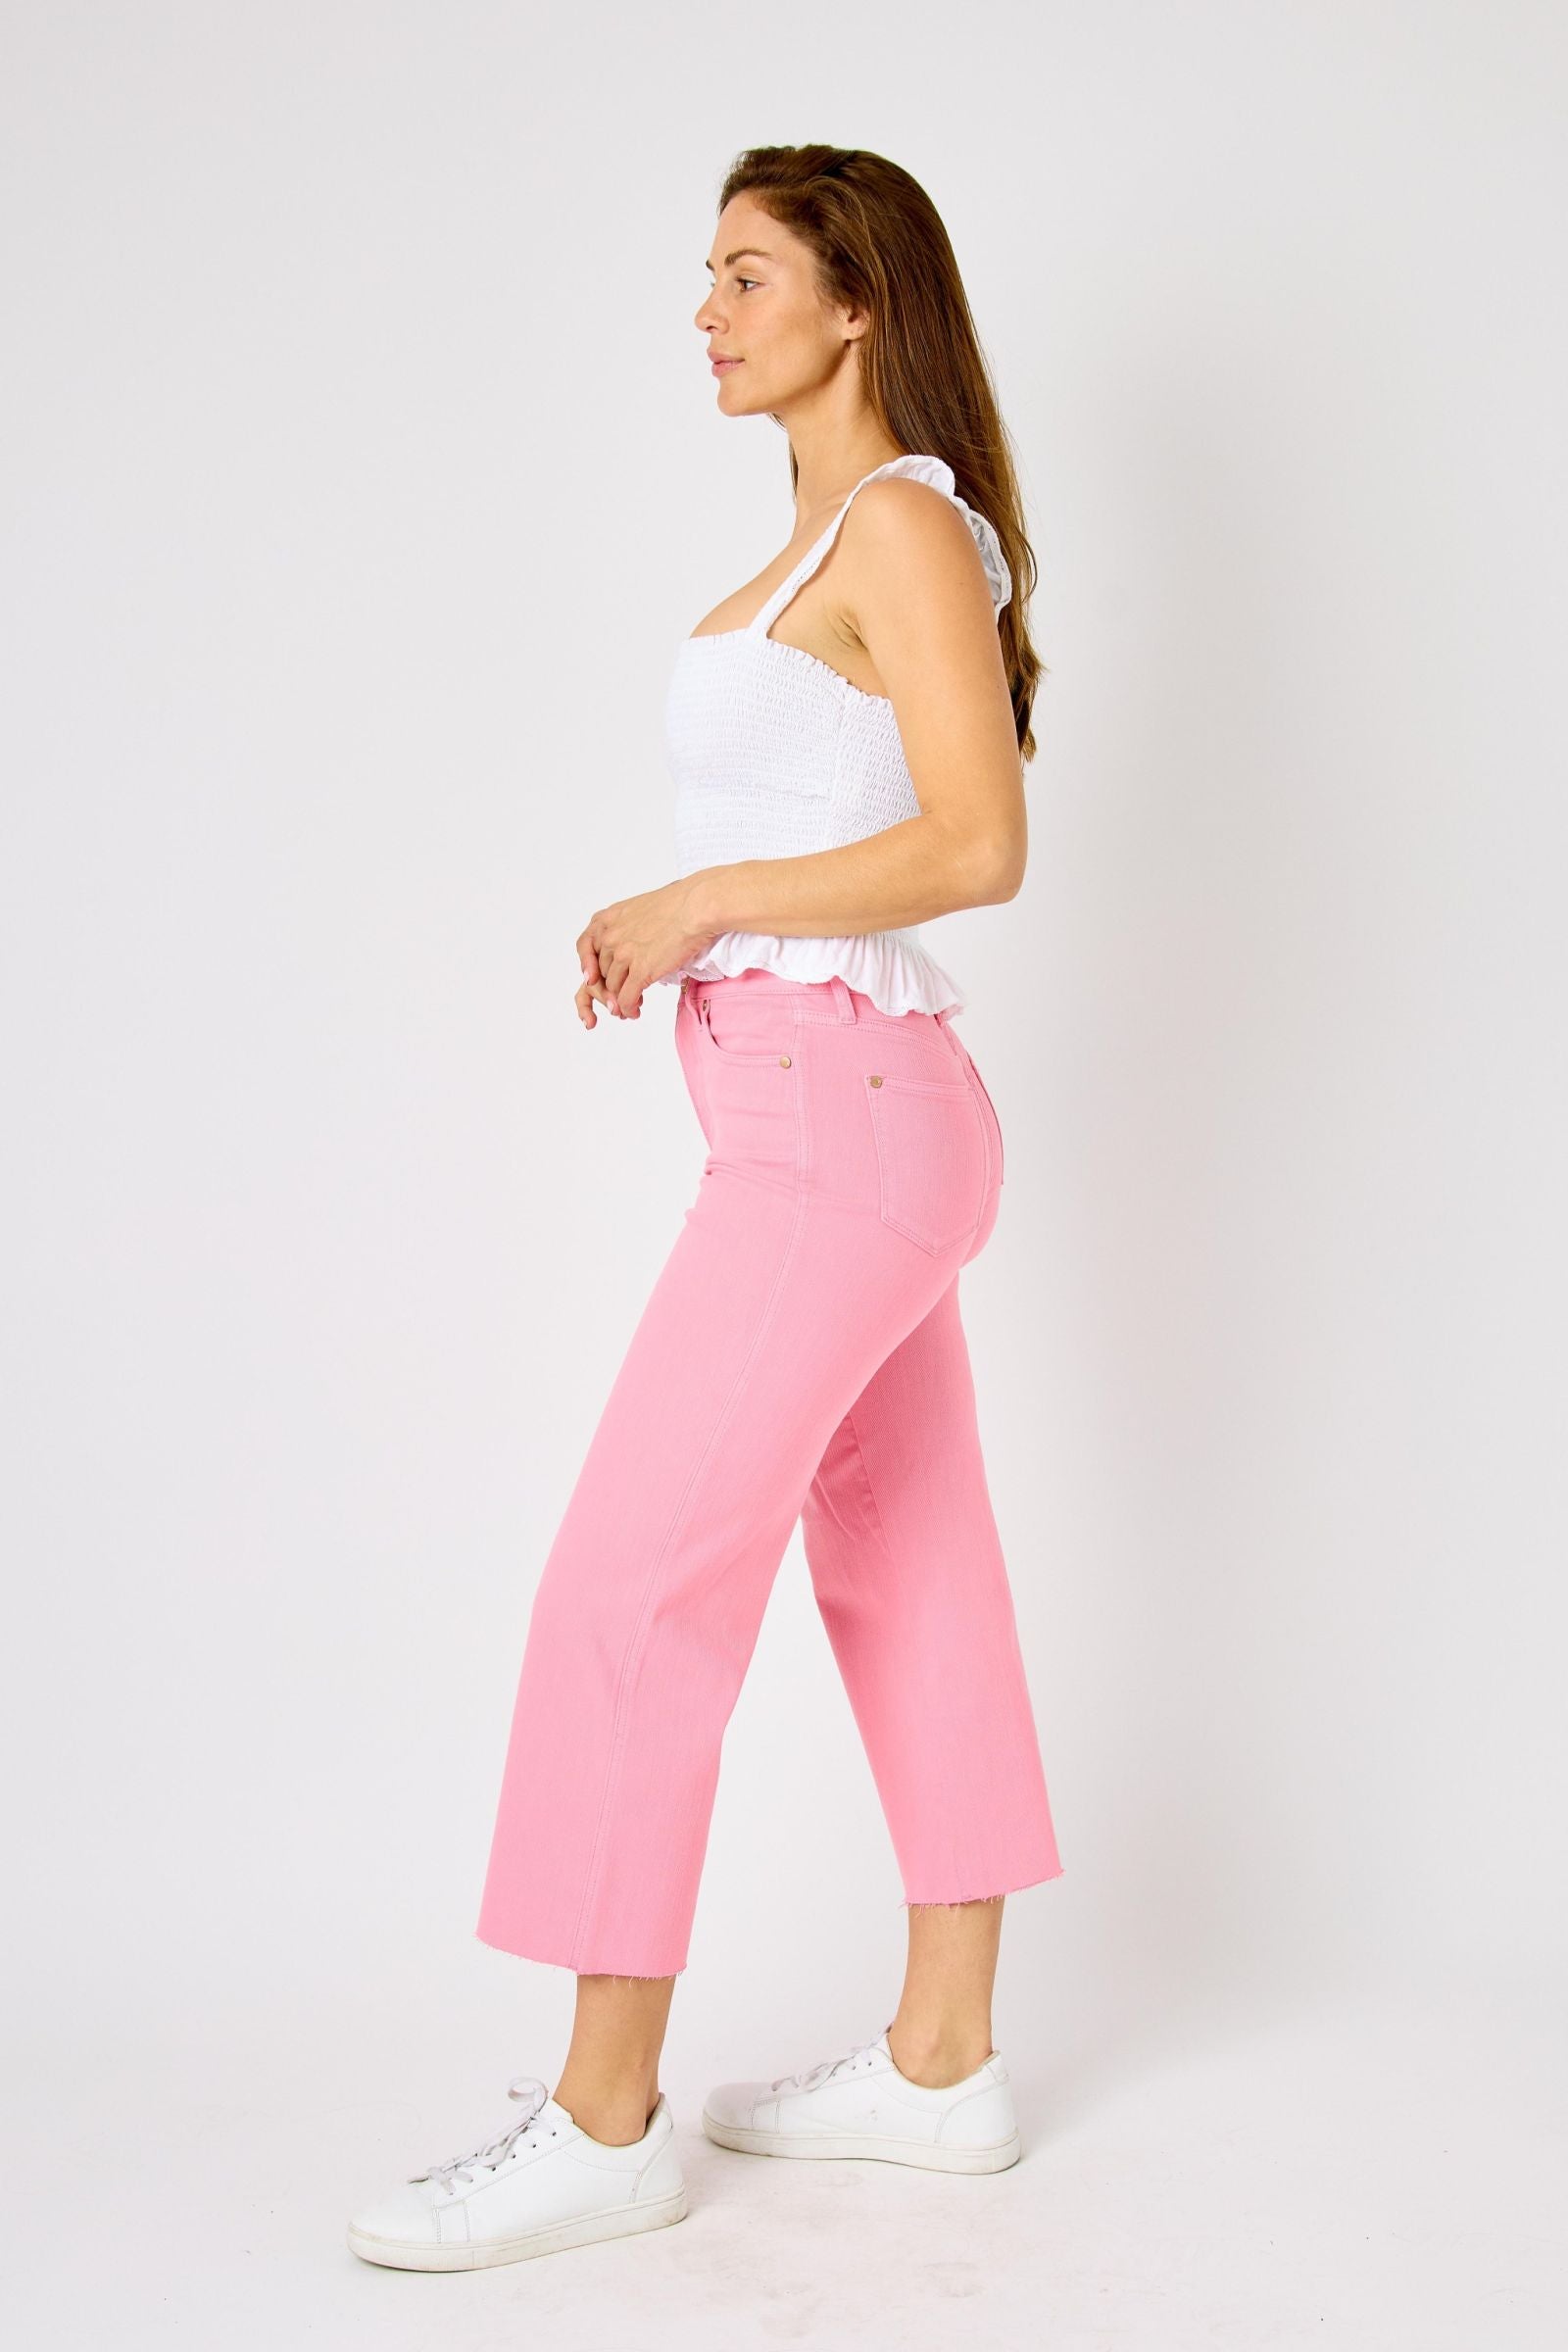 Bubble Gum Pink Wide Leg Judy Blue Crop Jeans